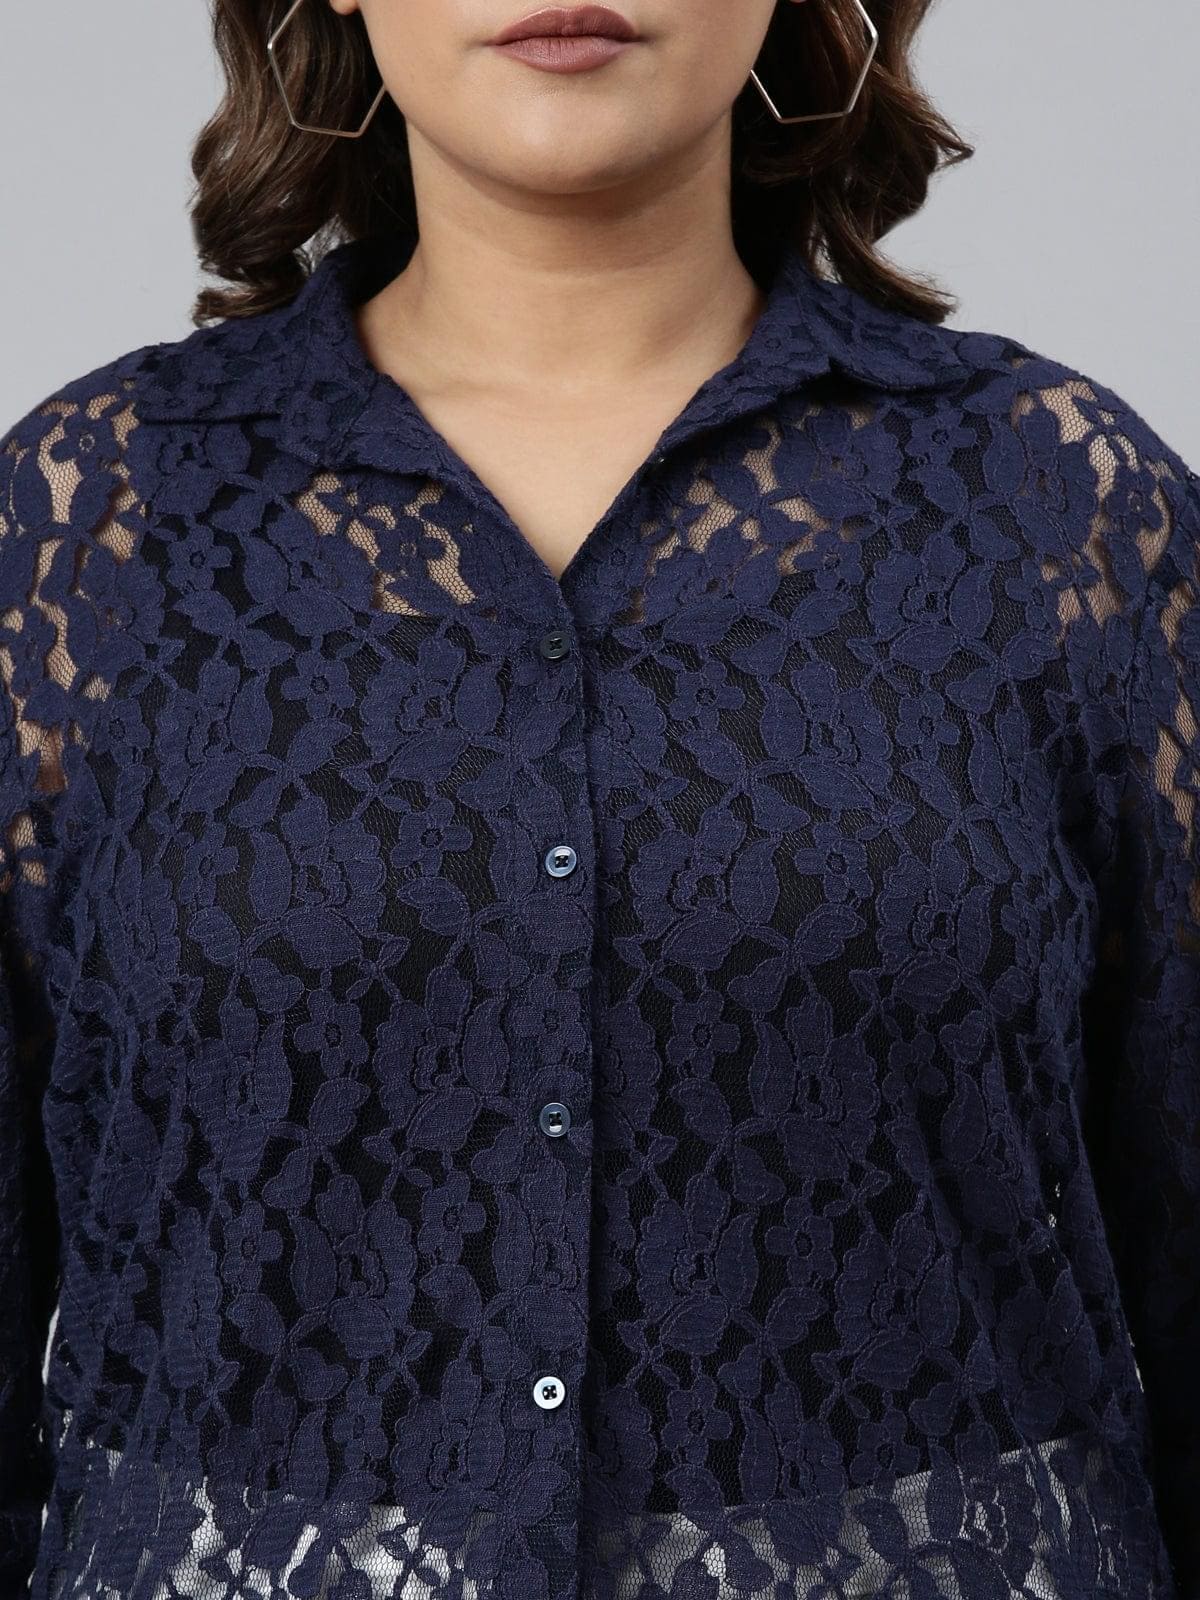 buy TheShaili  Blue lace shirt at best price